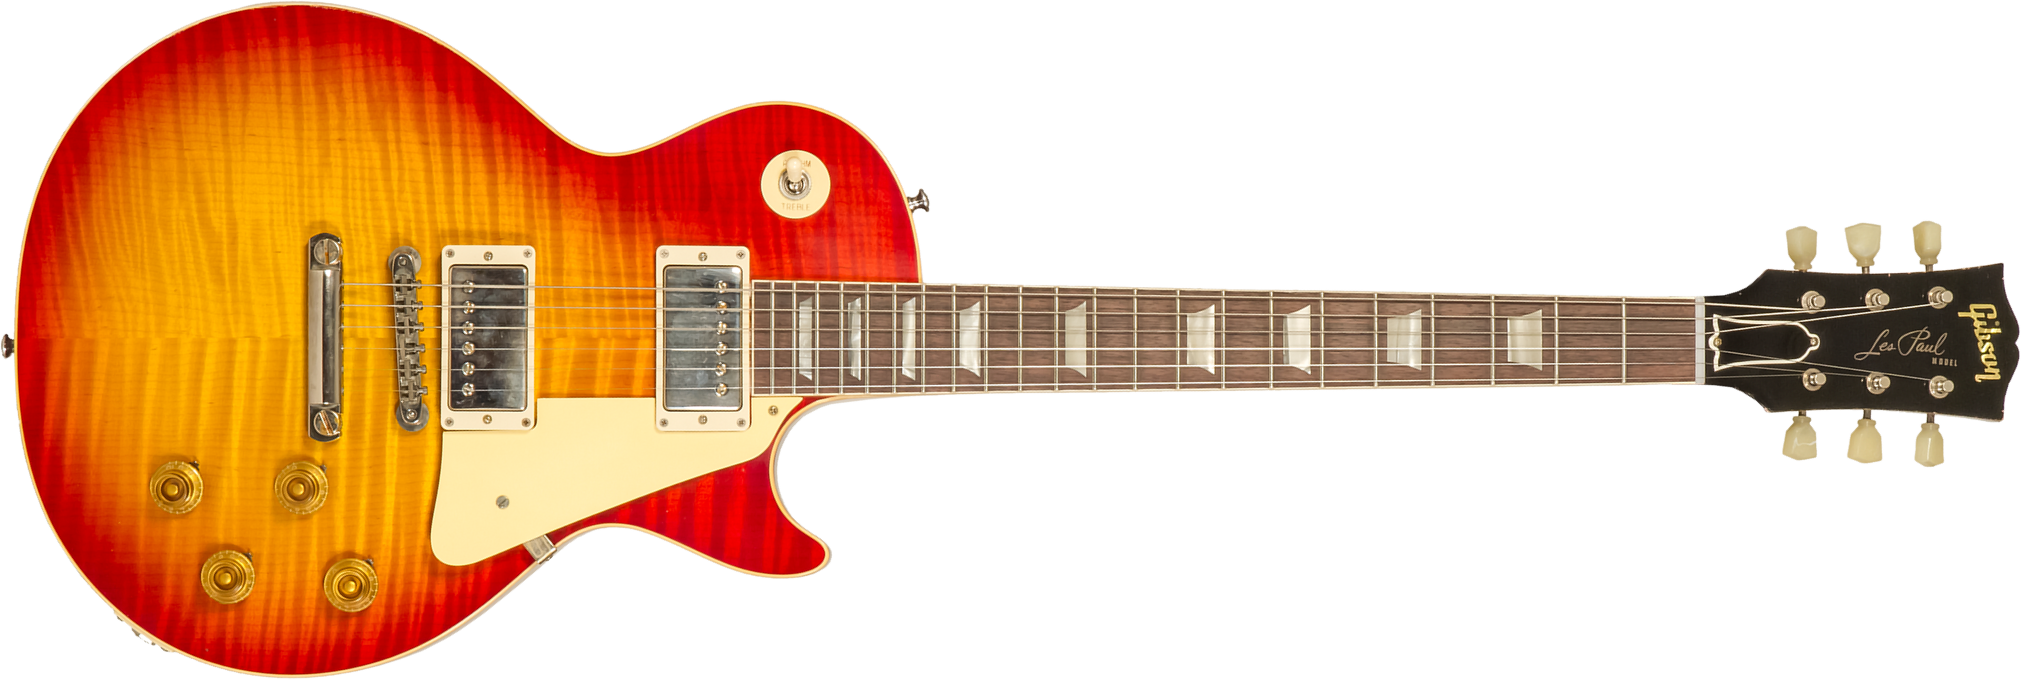 Gibson Custom Shop M2m Les Paul Standard 1959 Reissue 2h Ht Rw #94389 - Murphy Lab Light Aged Washed Cherry Sunburst - Guitarra eléctrica de corte úni